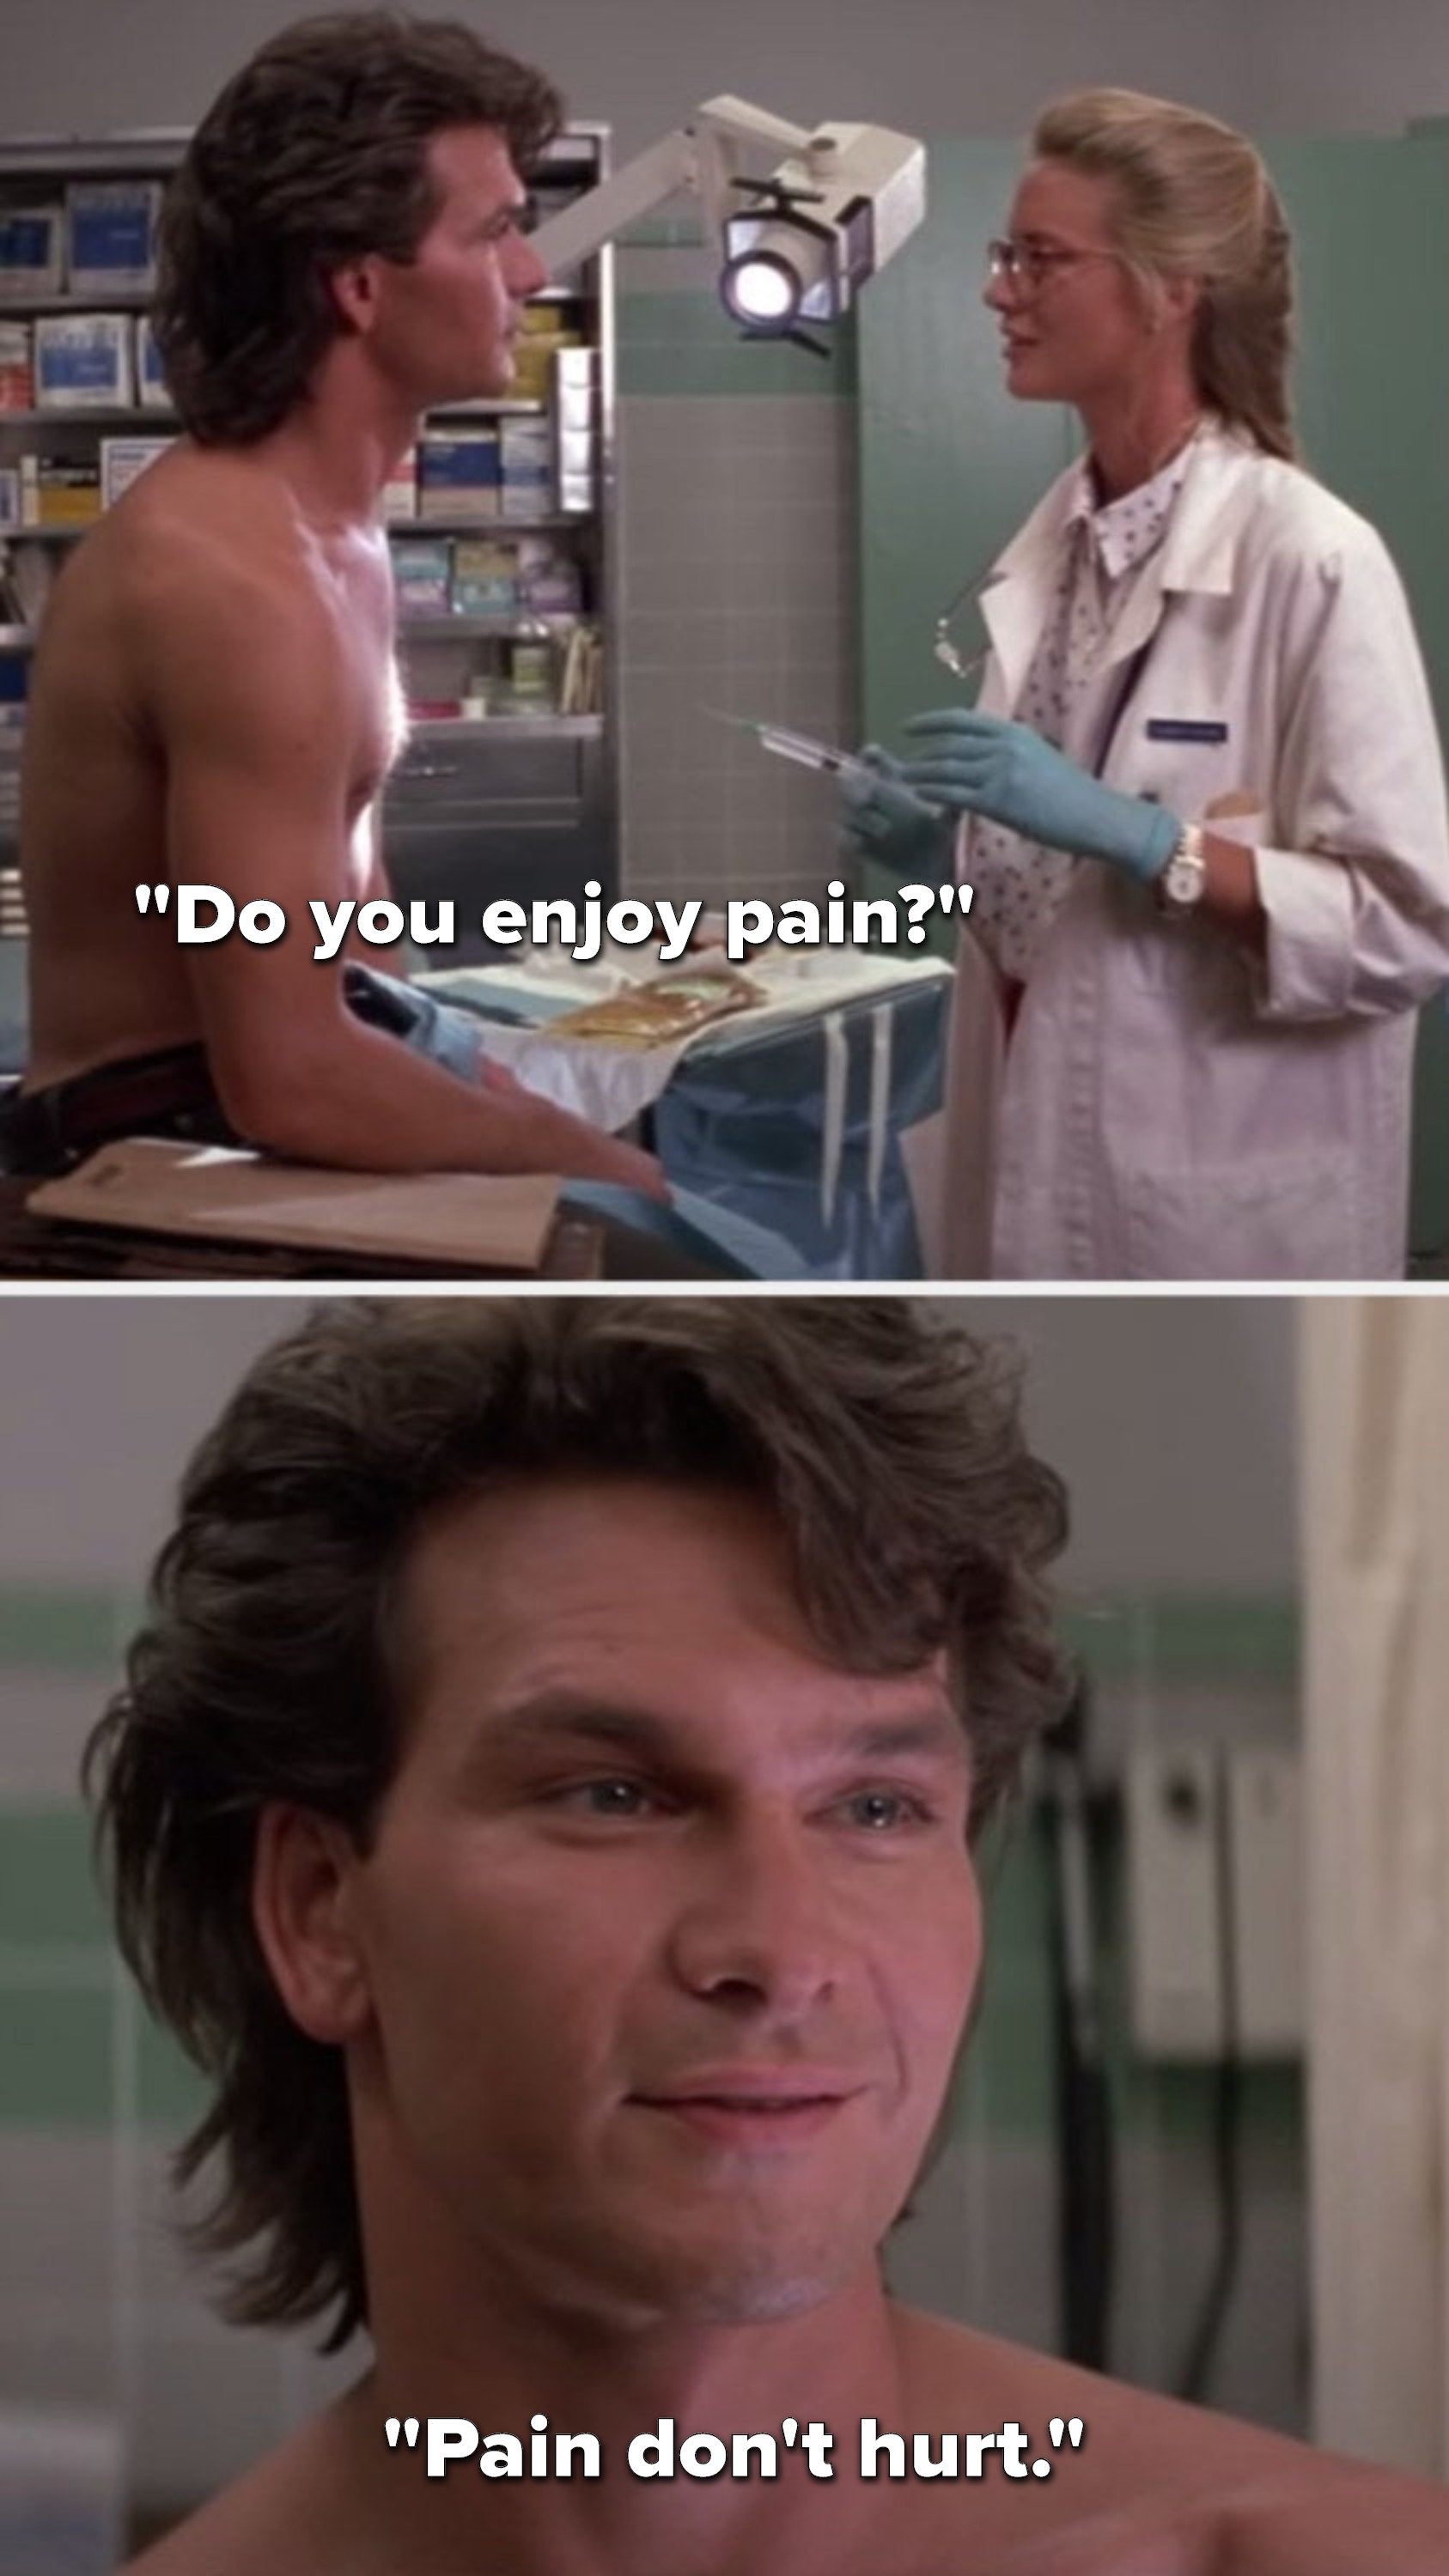 The doctor asks, &quot;Do you enjoy pain,&quot; and Dalton says, &quot;Pain don&#x27;t hurt&quot;